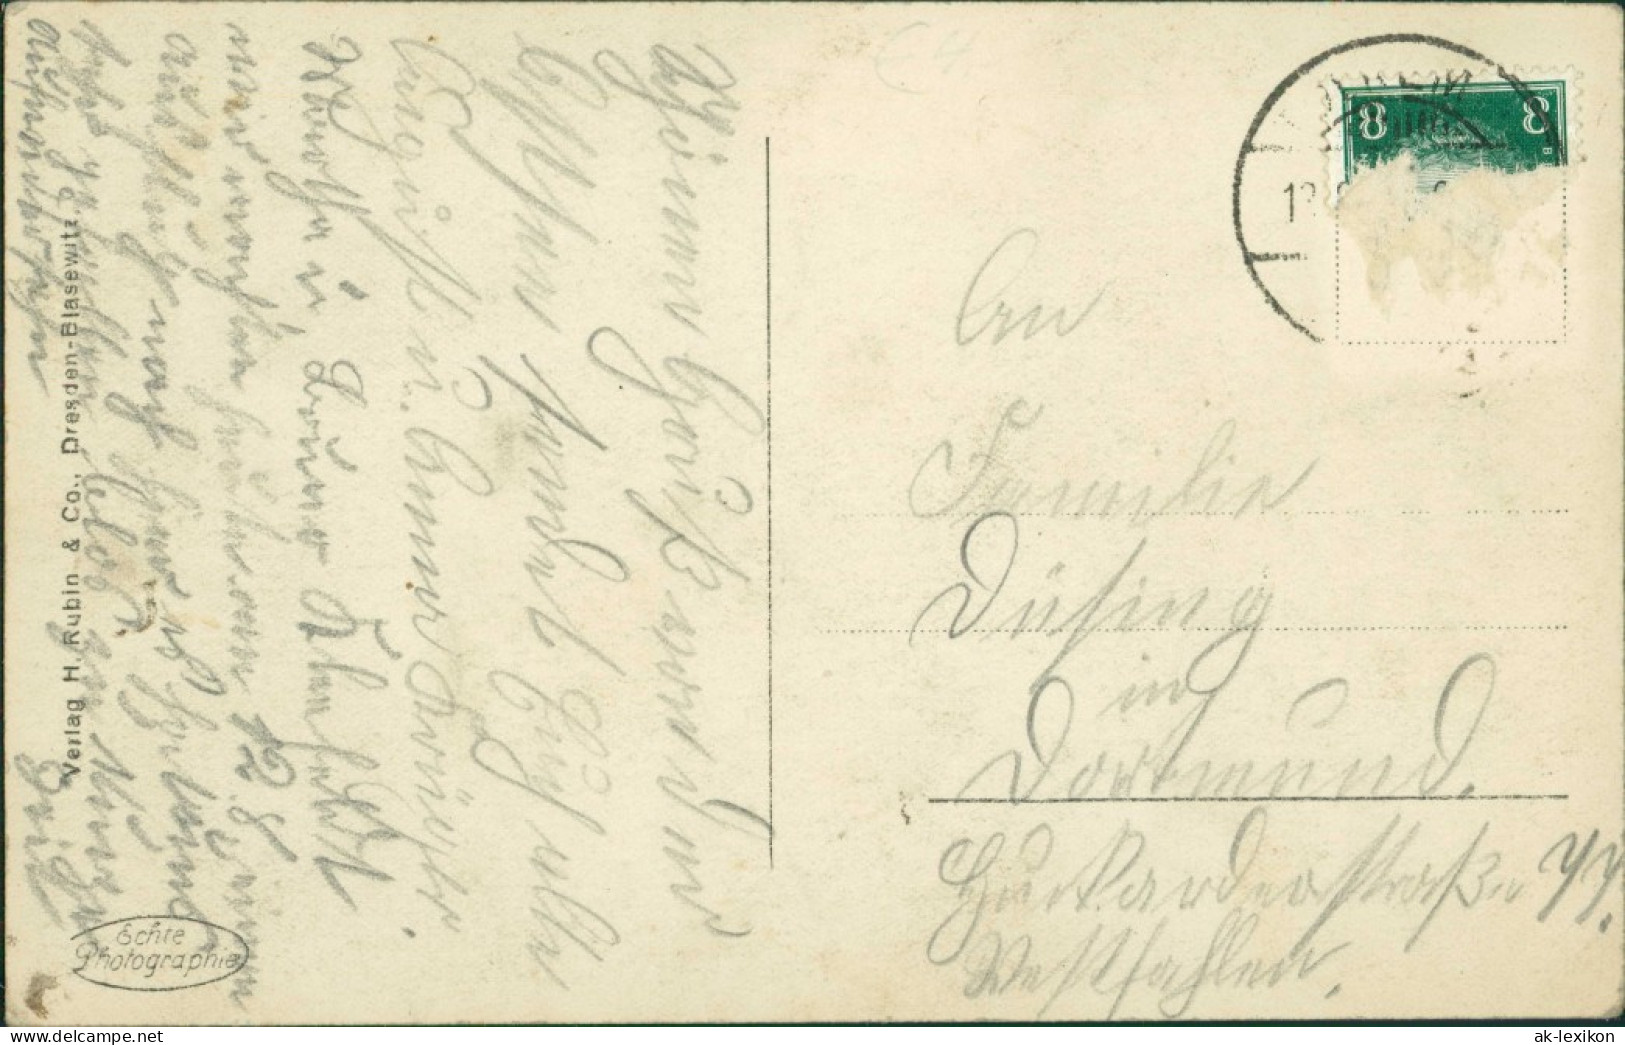 Postcard Kahlberg Krynica Morska|Łysica Straße, Strandhalle 1927 - Pommern